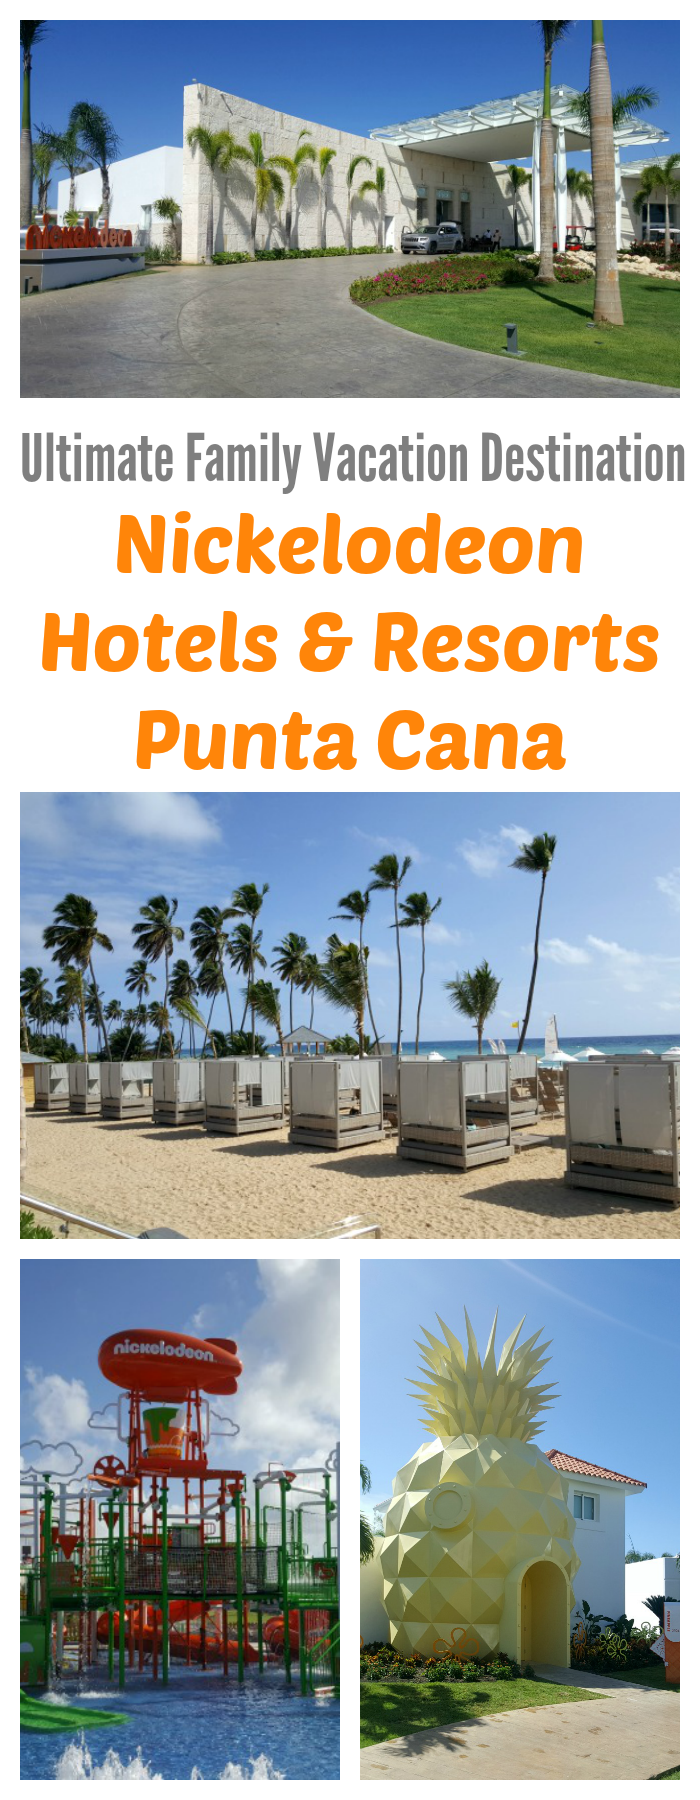 nickelodeon-hotels-resorts-punta-cana-ultimate-family-vacation-destination